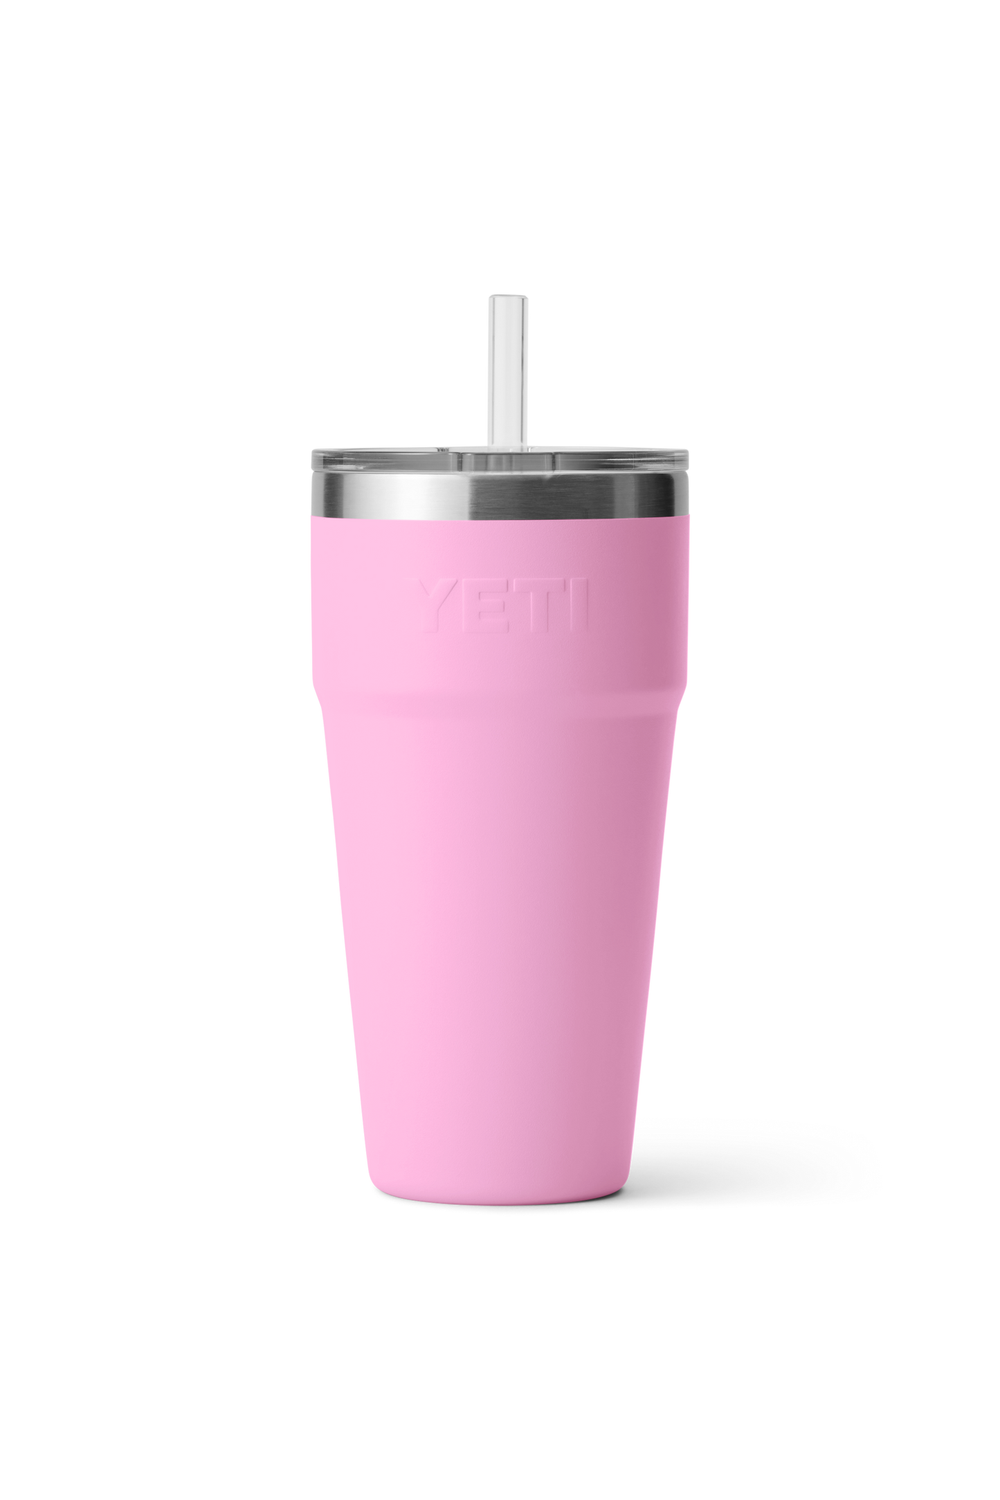 Yeti Rambler 26oz Straw Cup Power Pink